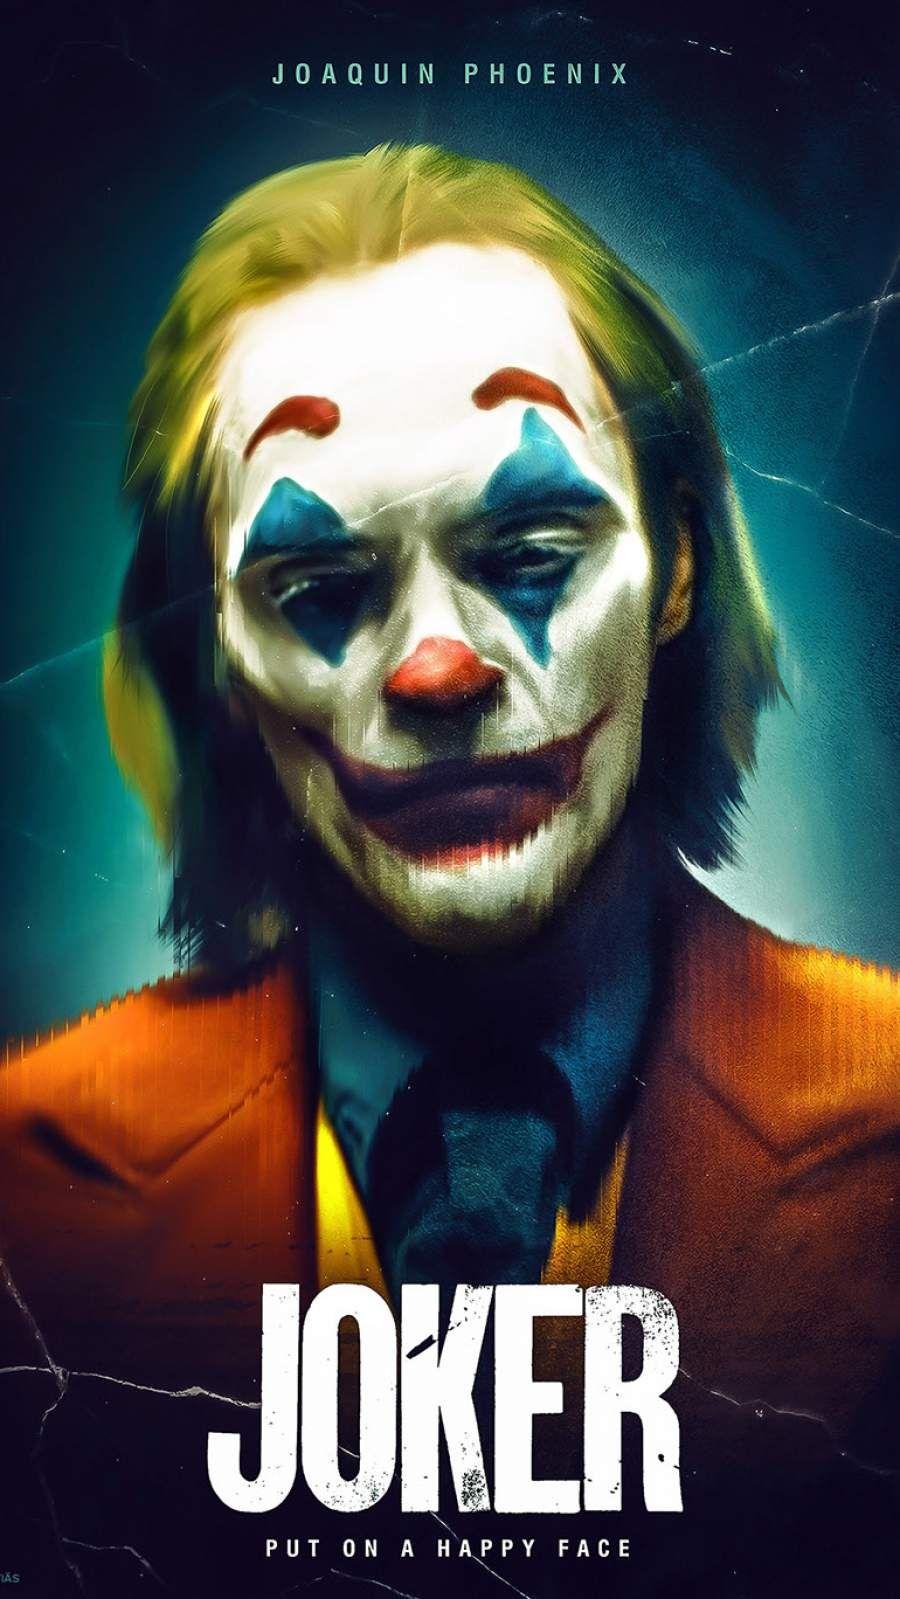 Joker Joaquin Phoenix iPhone Wallpaper. Joker wallpaper